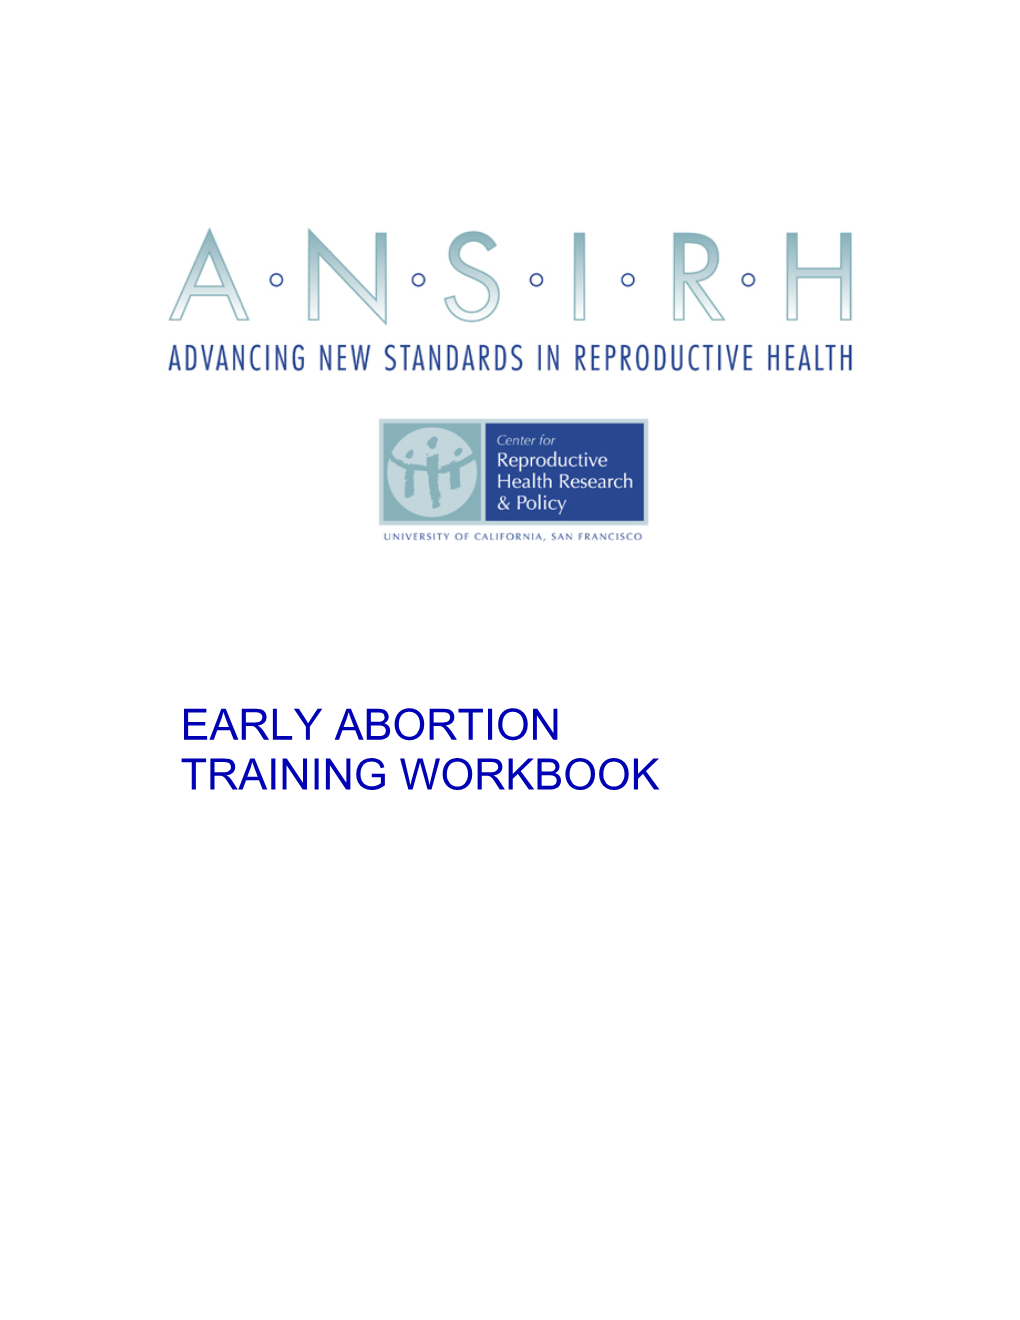 Early Abortion Training Workbook